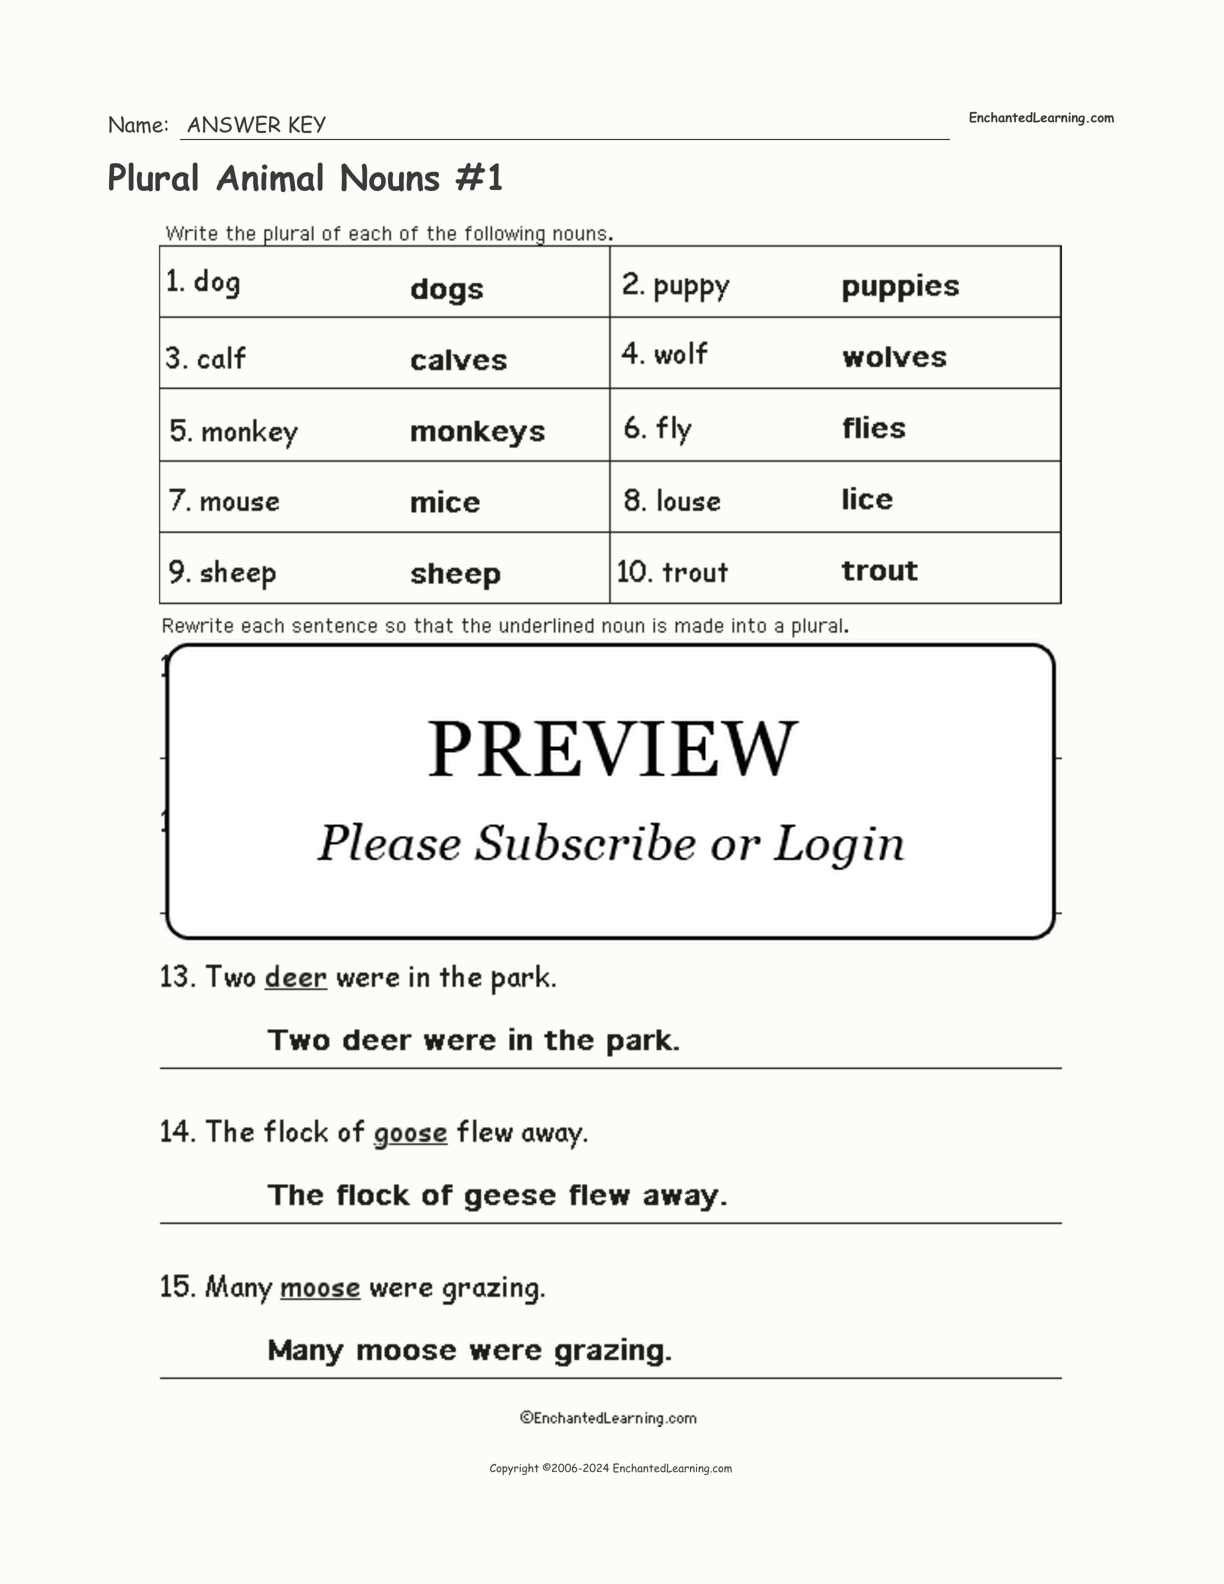 Plural Animal Nouns #1 interactive worksheet page 2